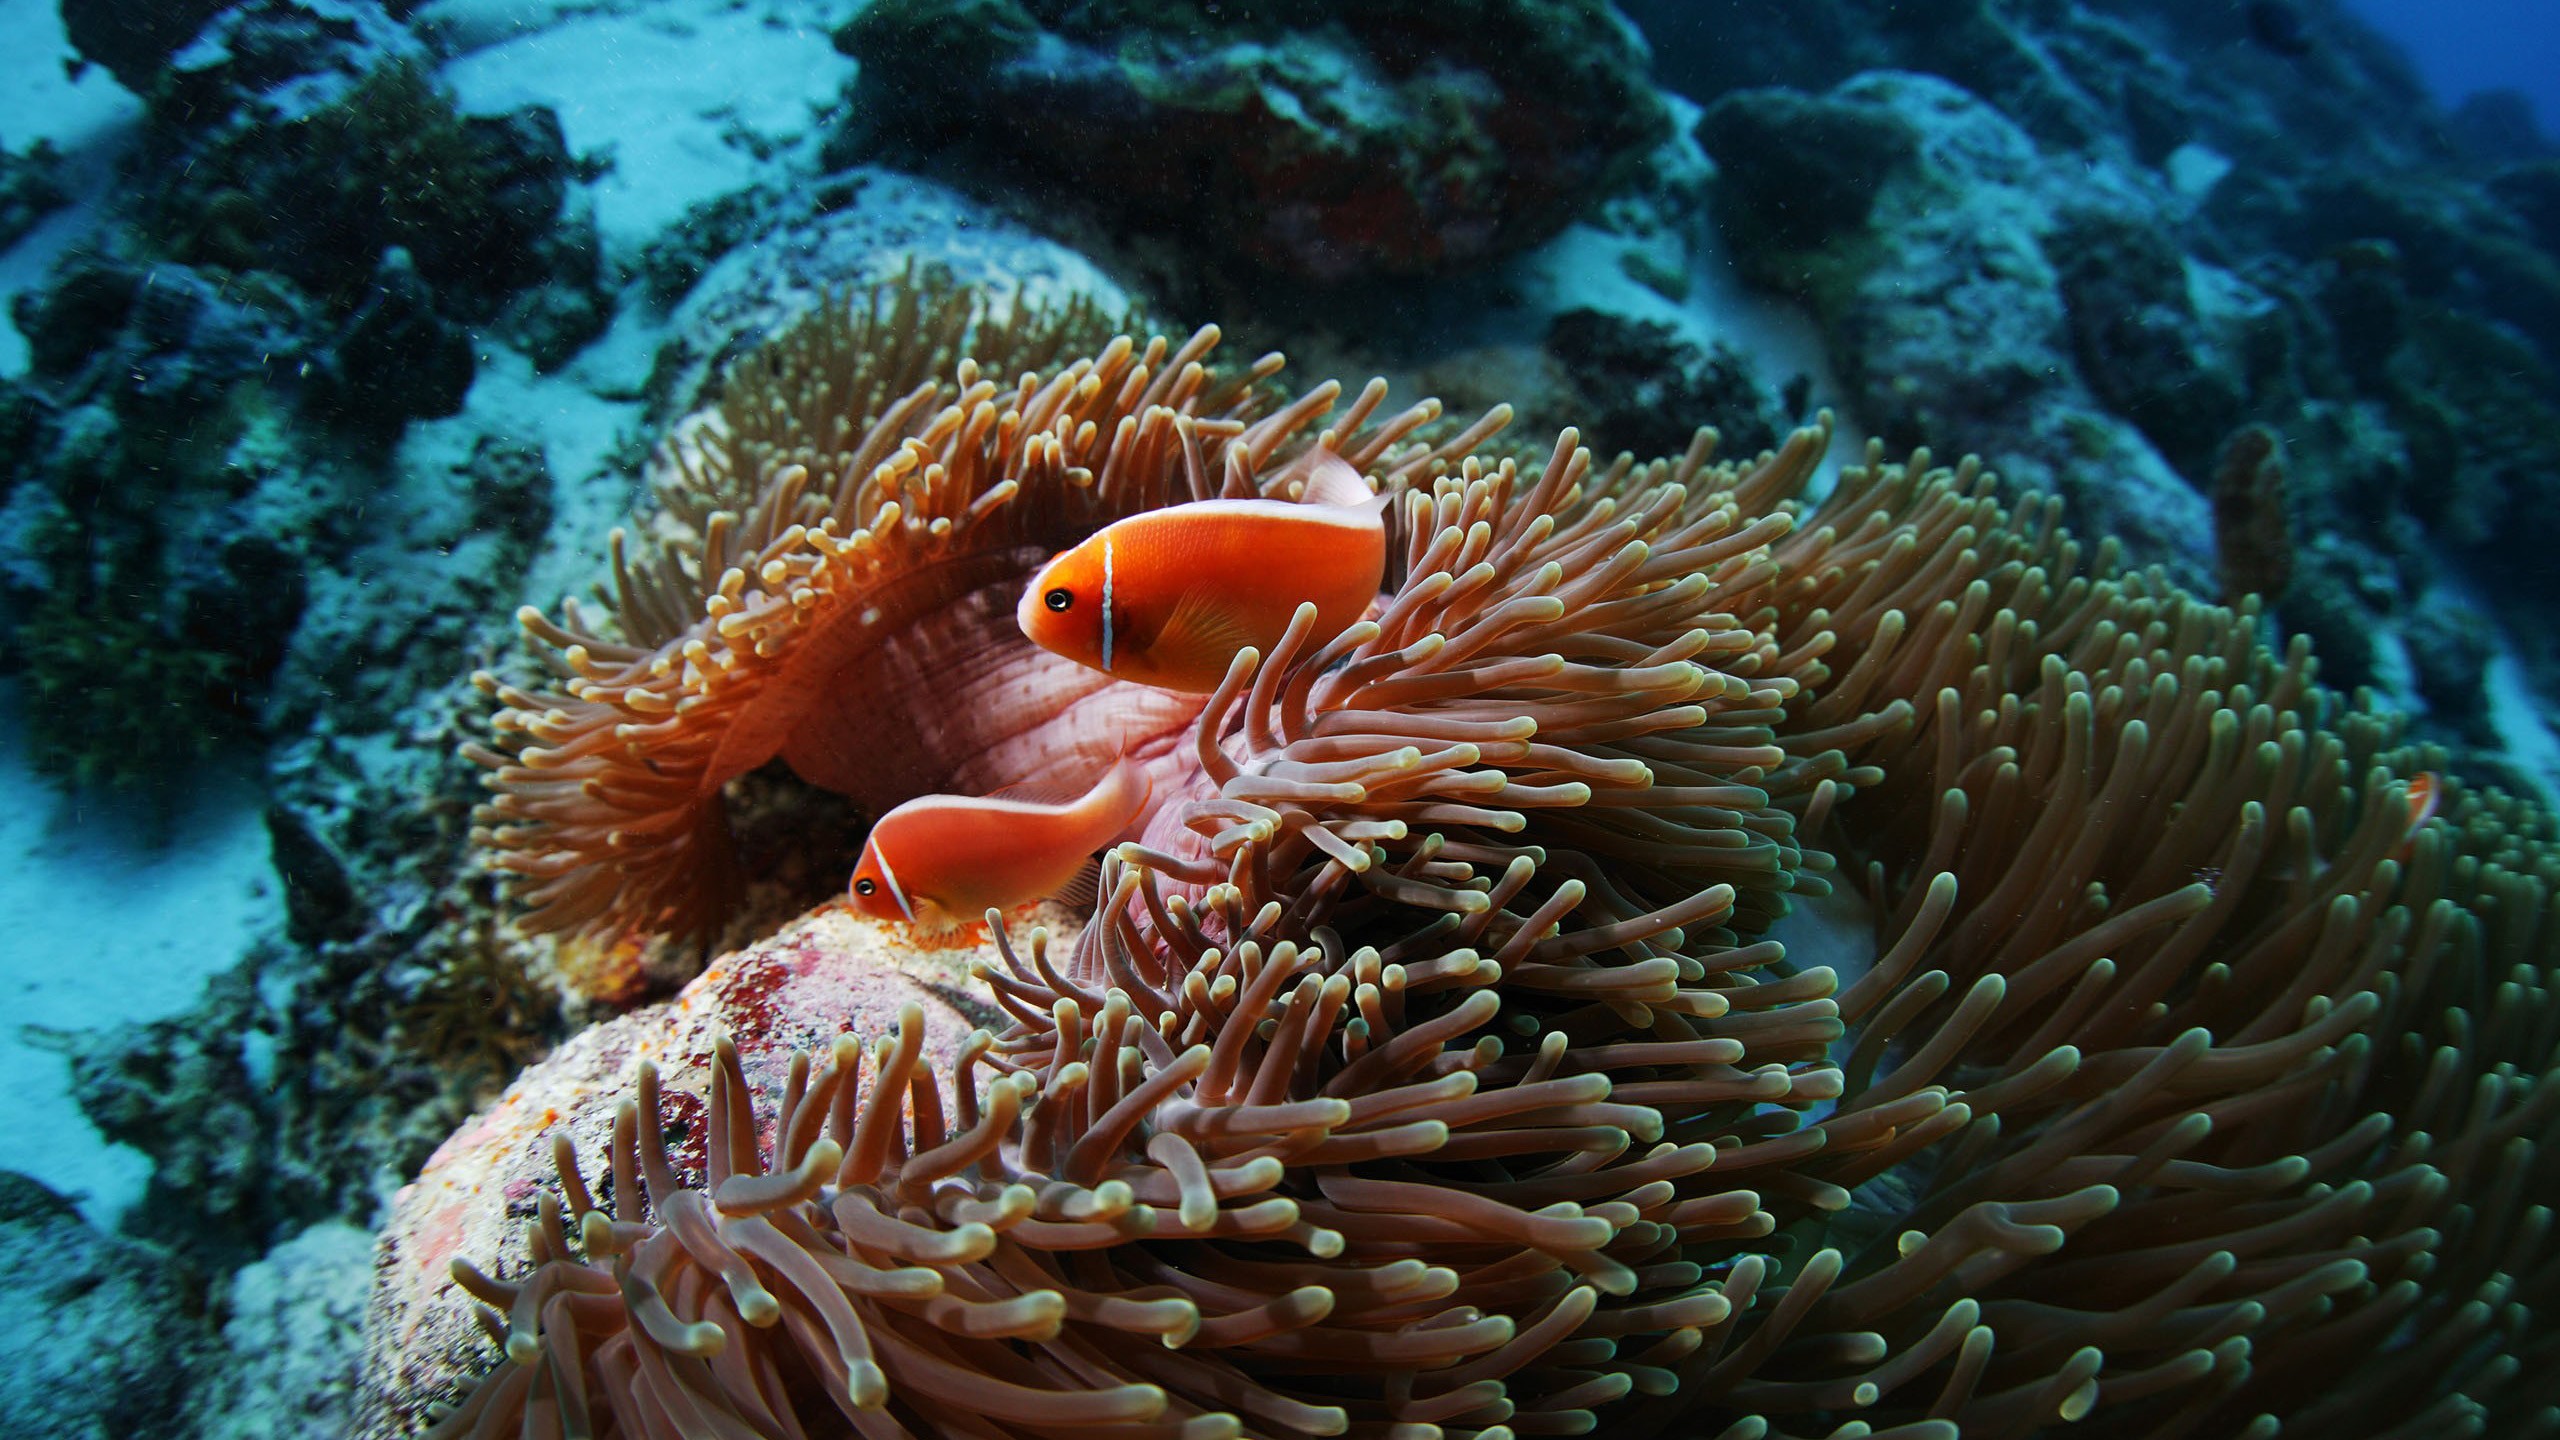 General 2560x1440 clownfish sea anemones animals coral sea life underwater fish nature